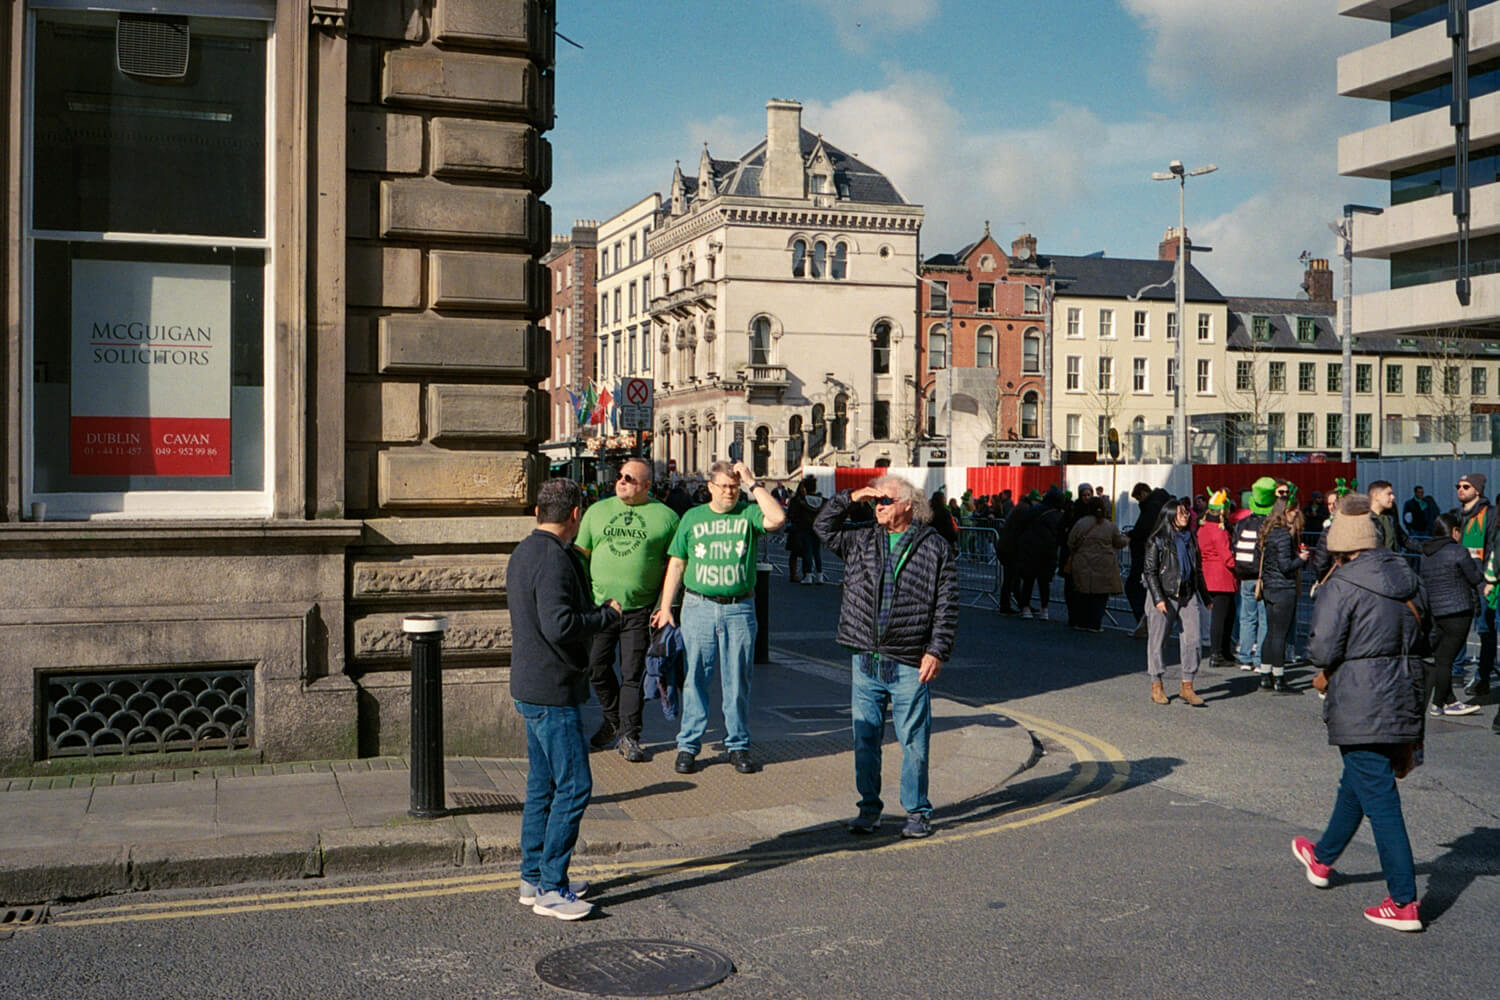 Patrick's Day 5 Frames of Dublin at Edox Color Mission 200 (35mm format / EI 200 / Leica M6 + Voigtlander 35mm f / 2.5 color scoper) - by Valentine de Villemeyer